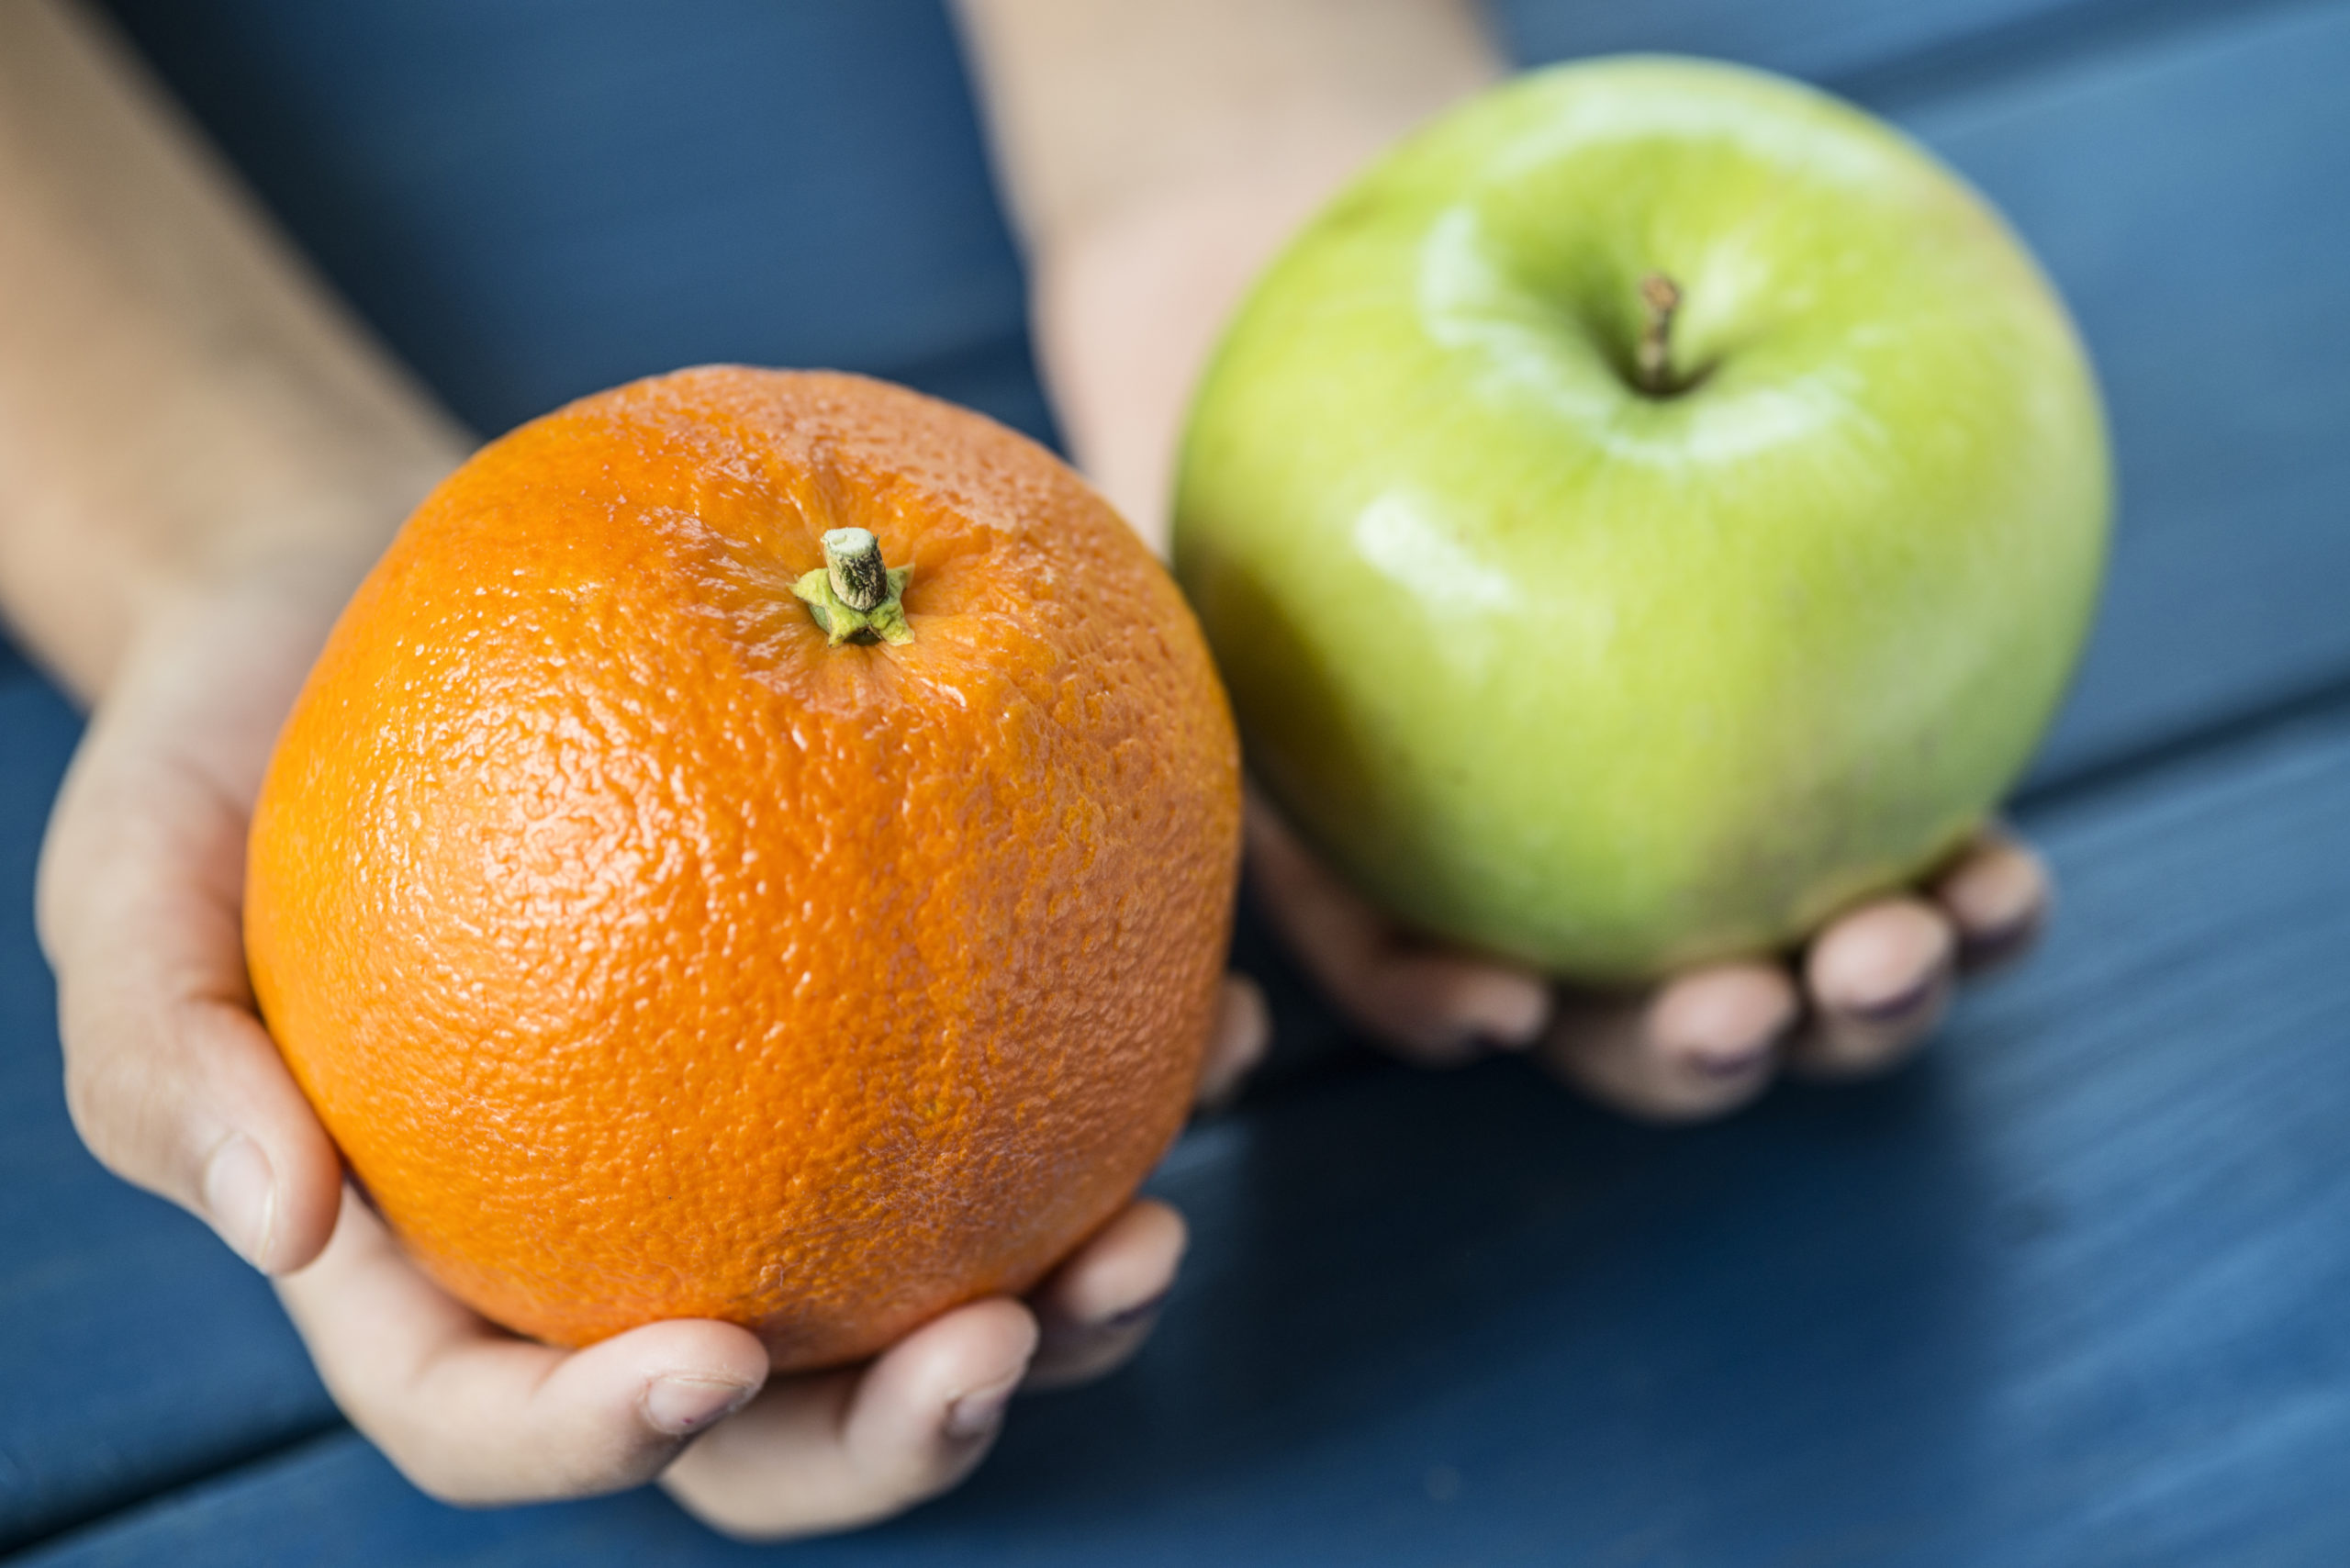 Мандарин займ. Яблоко и апельсин. Яблоки и мандарины. Мандарин в руке. Апельсиновое яблоко.